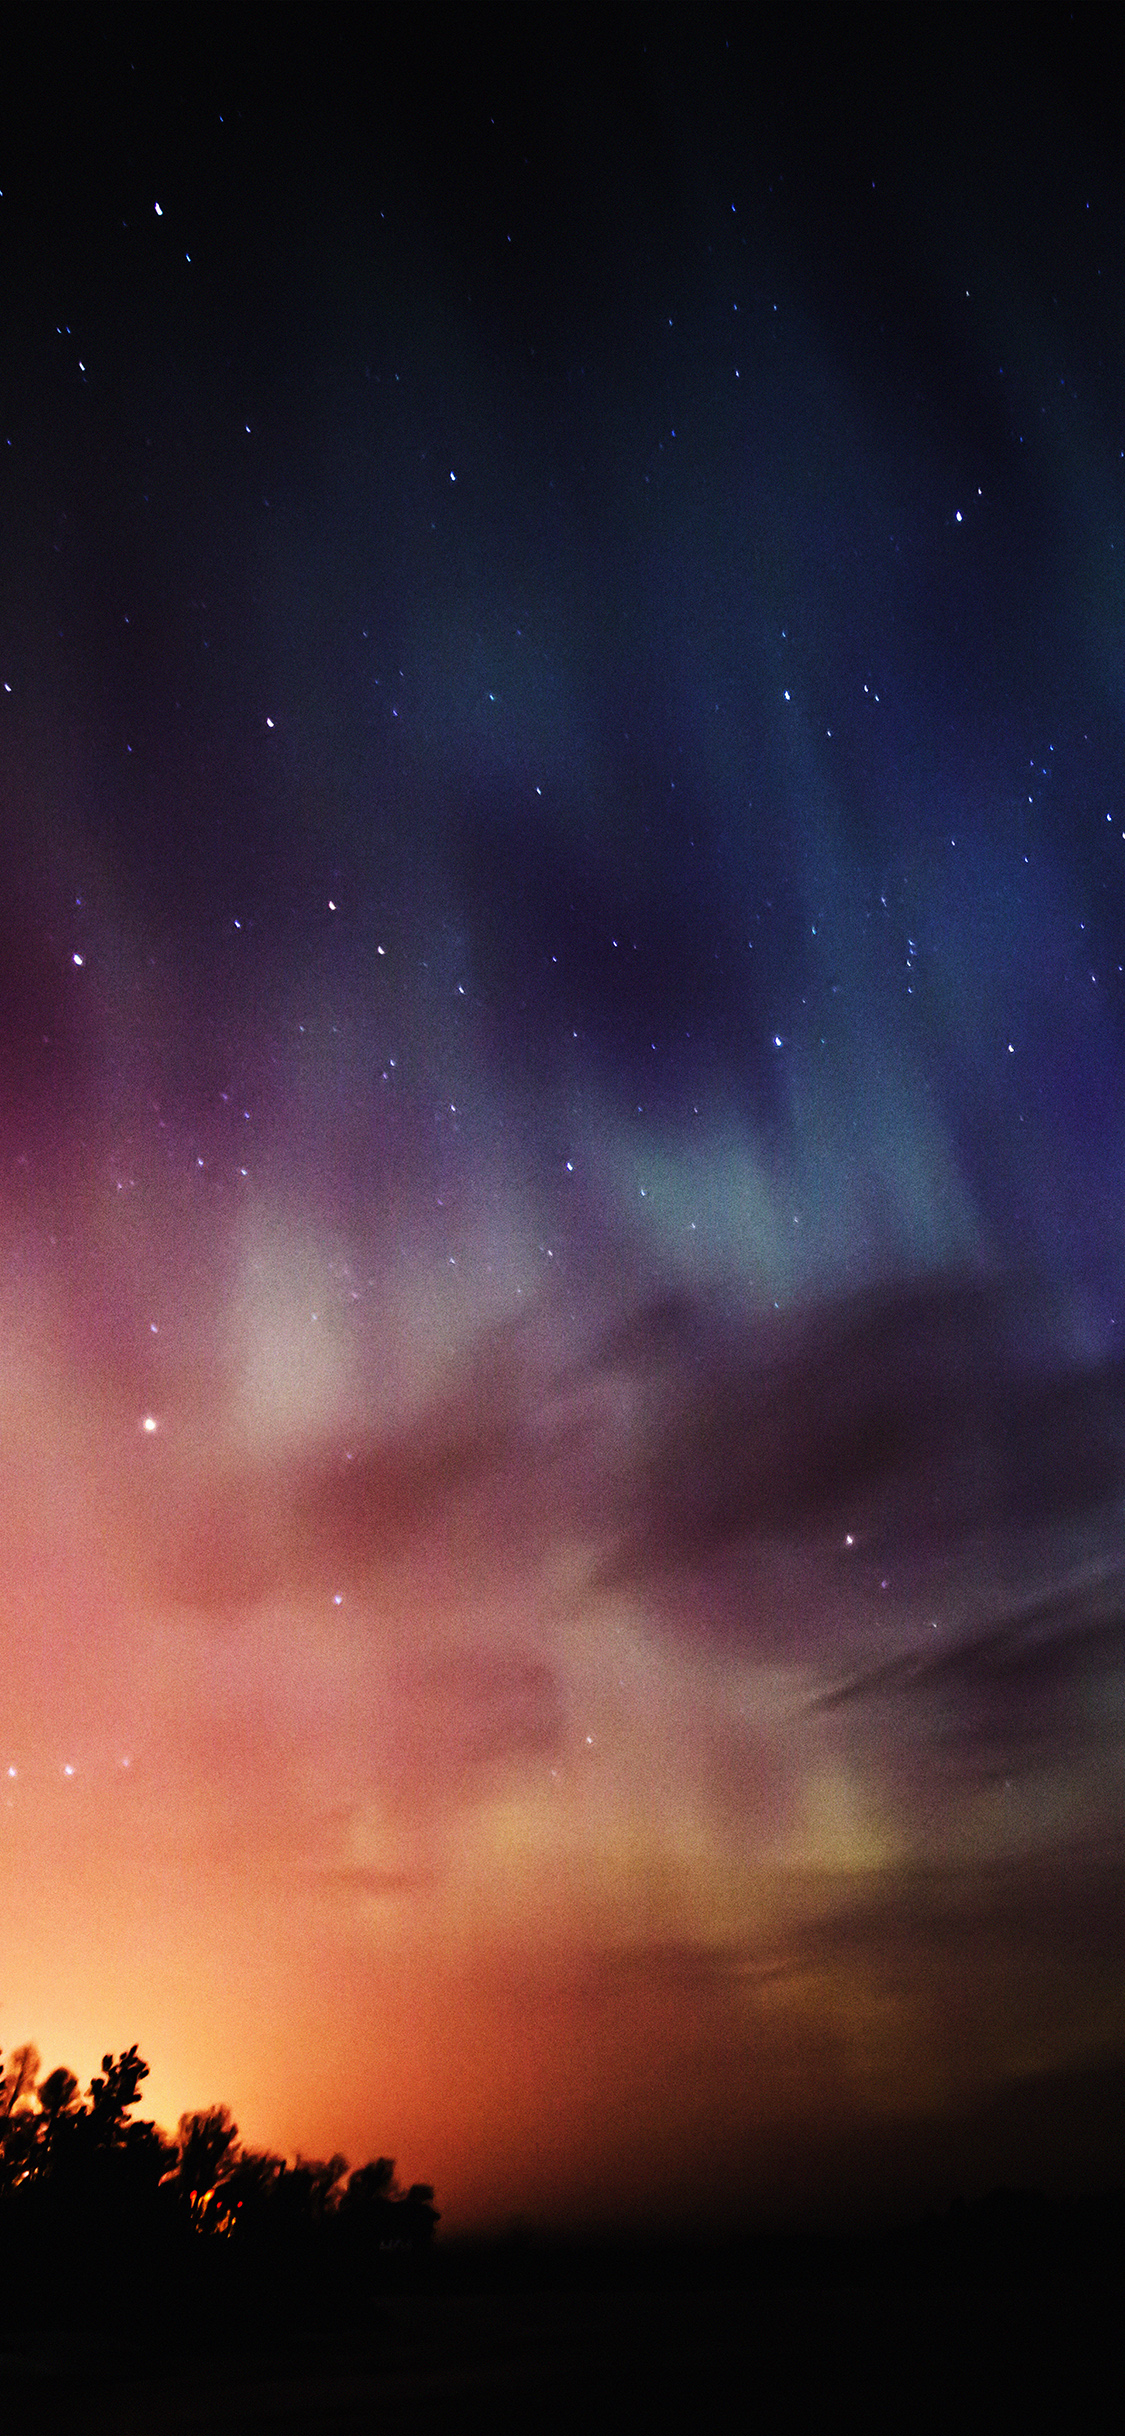 iPhone X wallpaper. sky aurora night stars wonderful rainbow